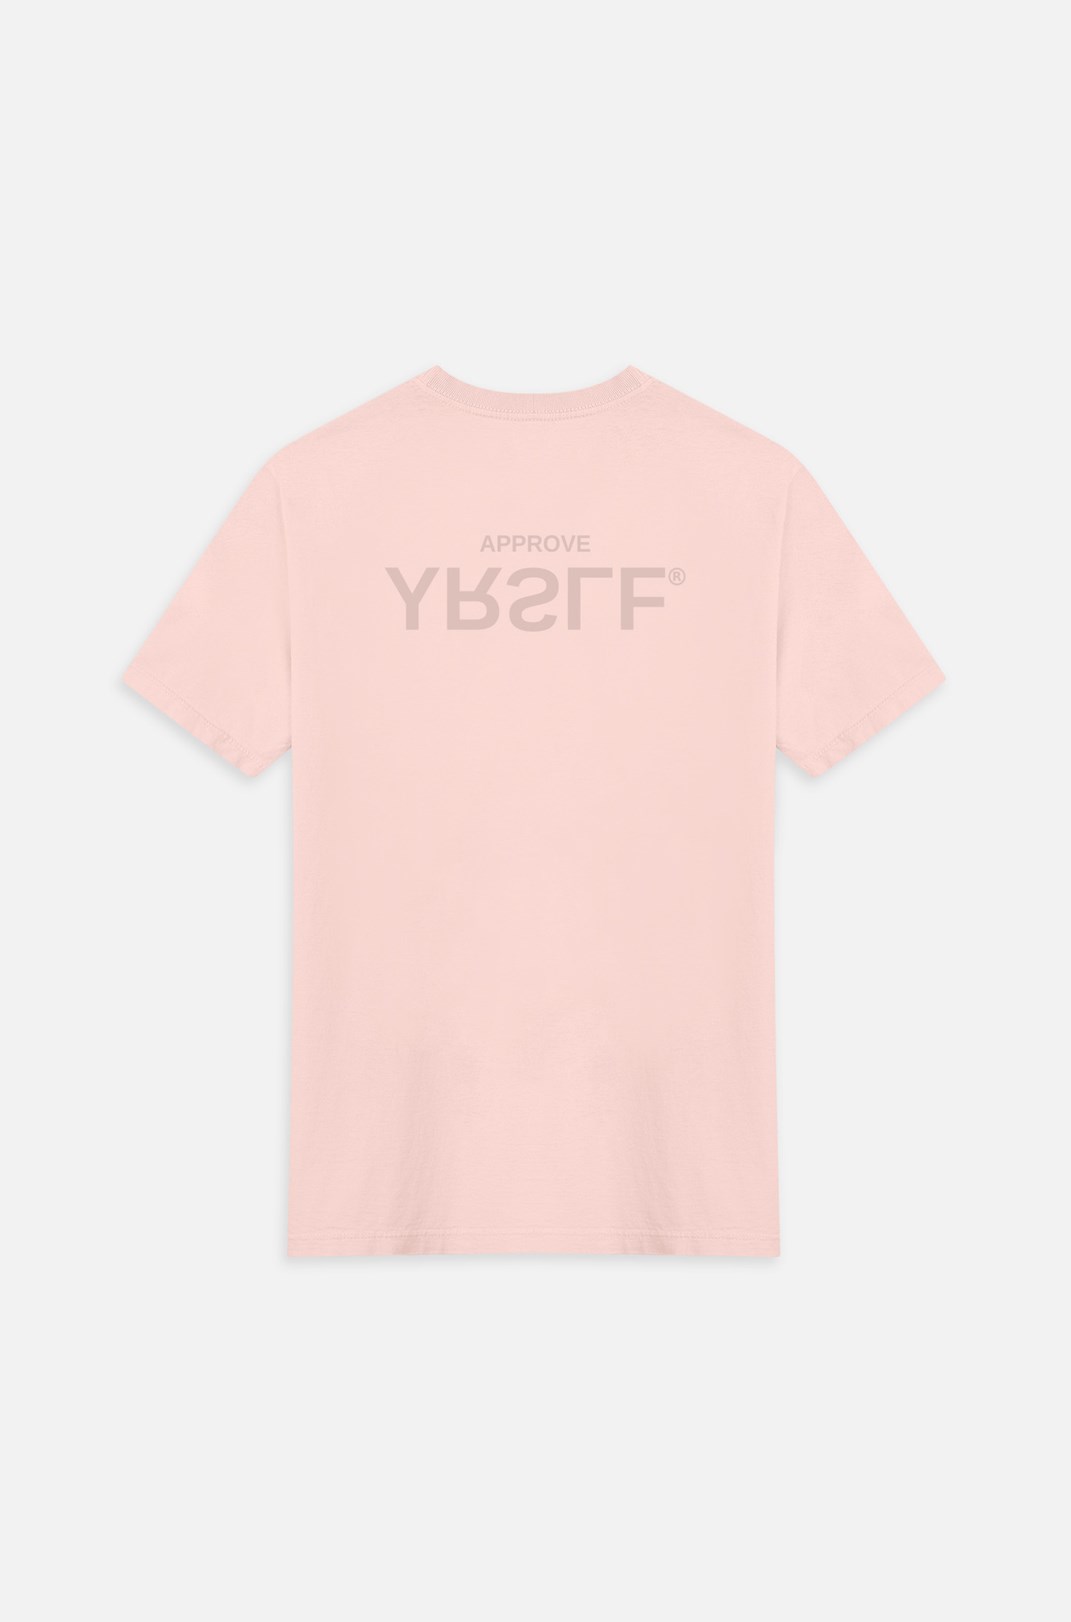 Camiseta Bold Approve Yslf Inverse Collors Rosa Claro